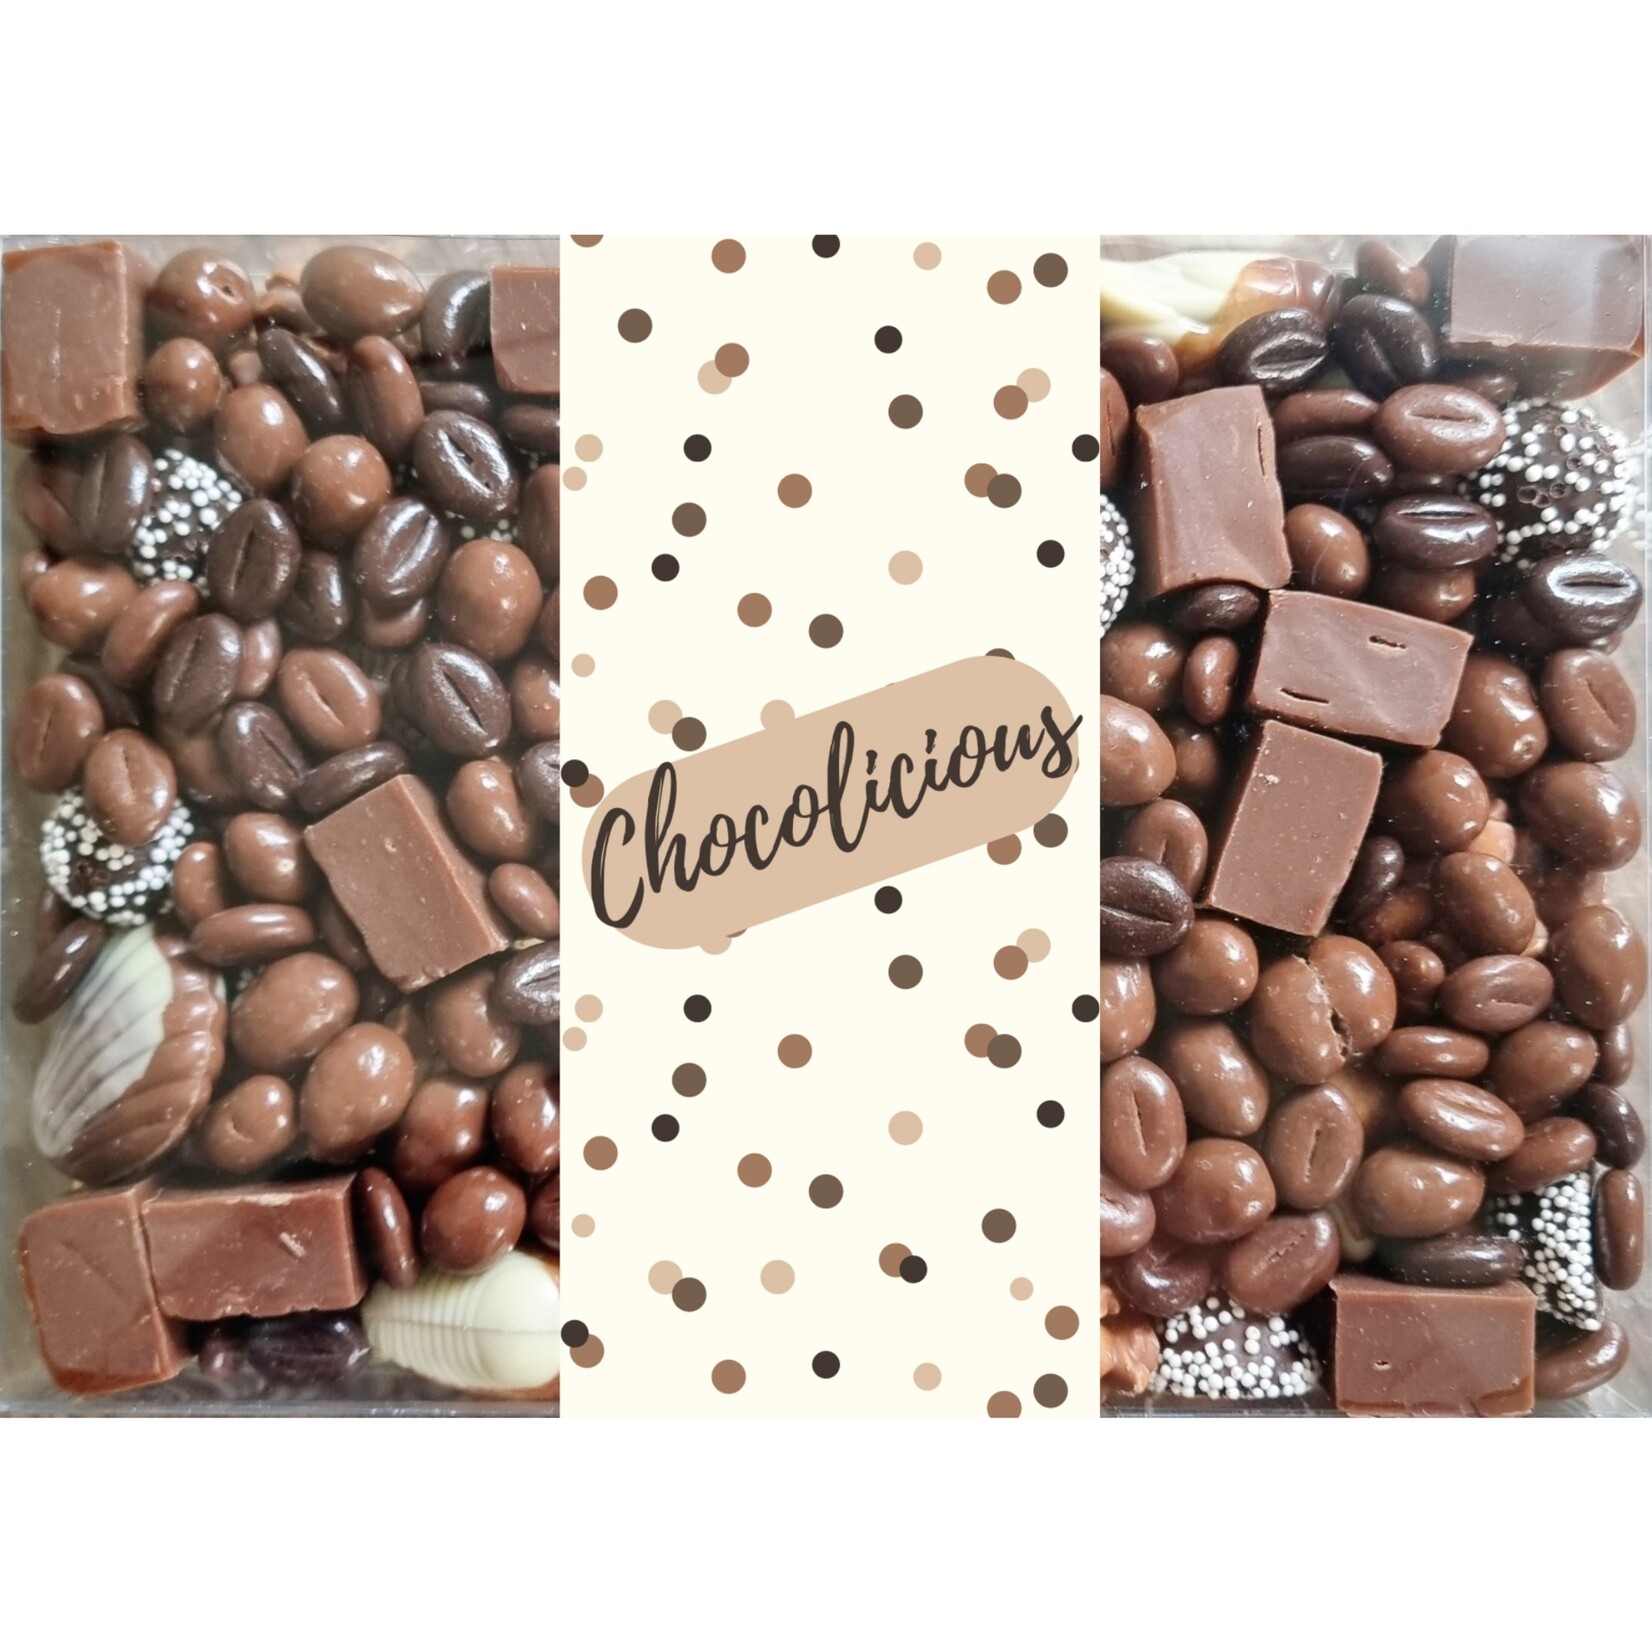 ZoeteGroet Mix Chocobox: Chocolicious